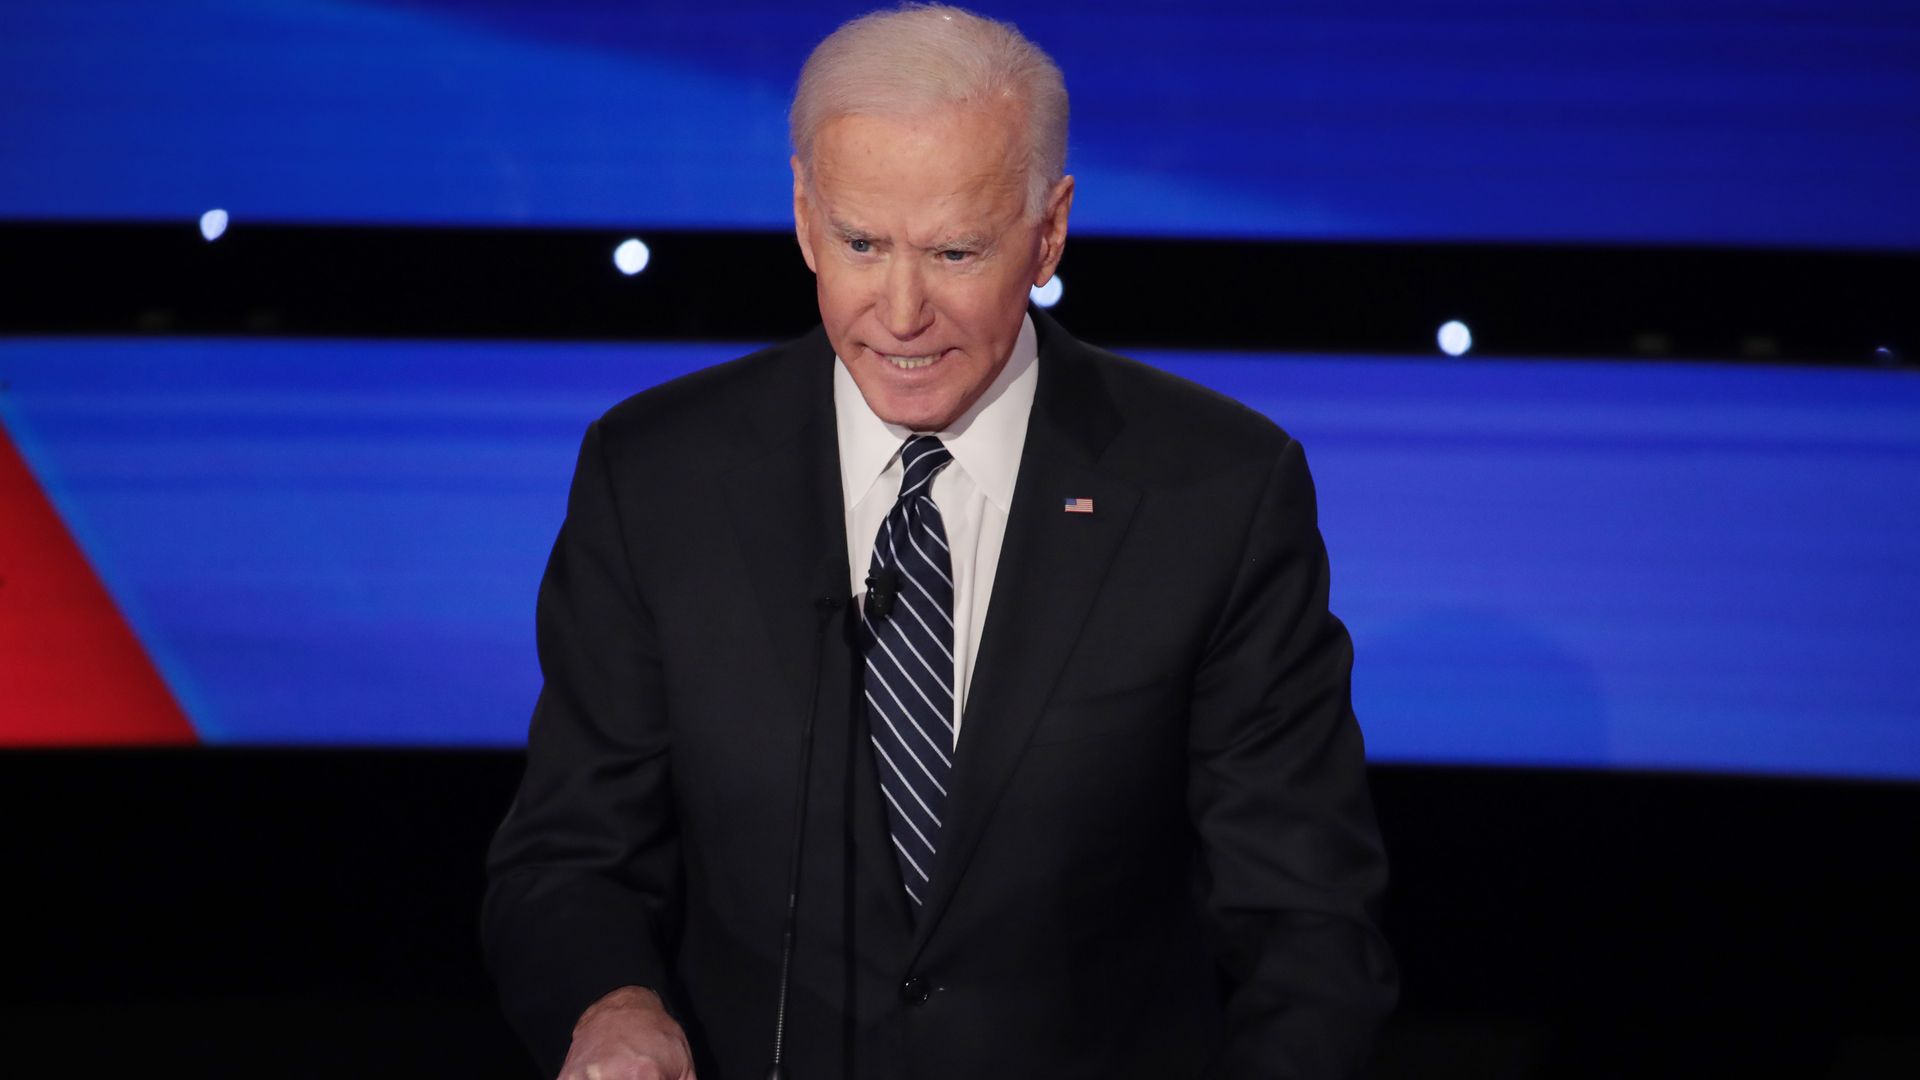 Photo of Joe Biden at the Democratic debate in Iowa on Jan. 14, 2020